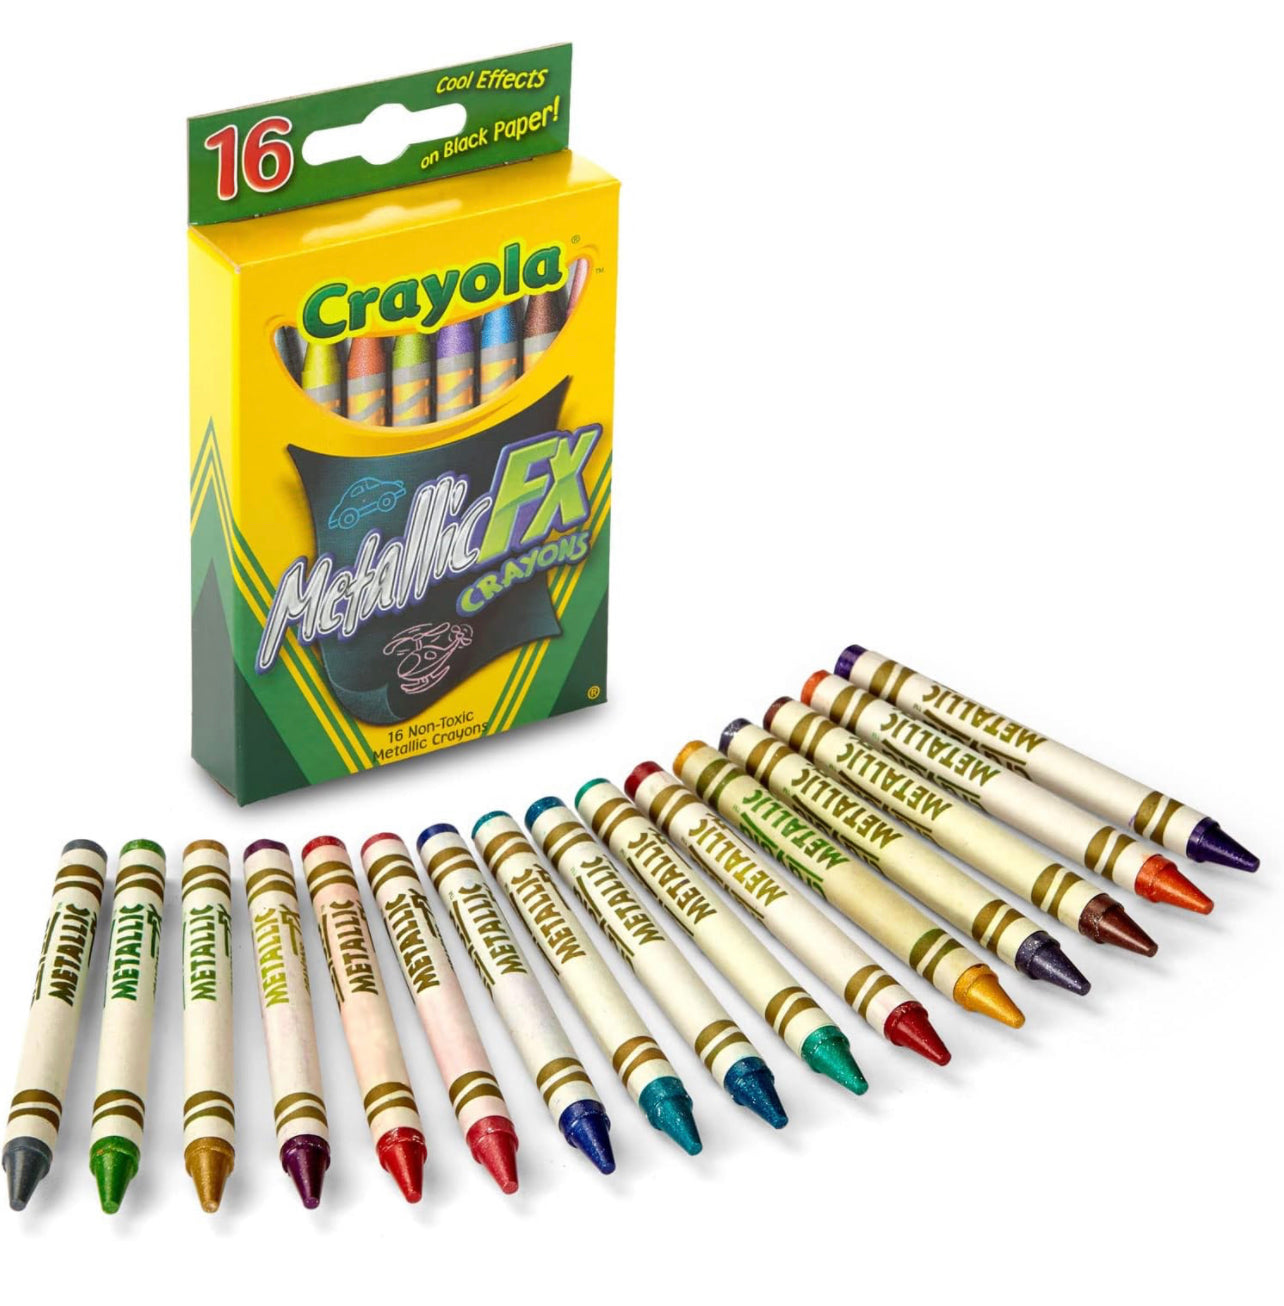 Crayola Metallic FX Crayons 16 Colors